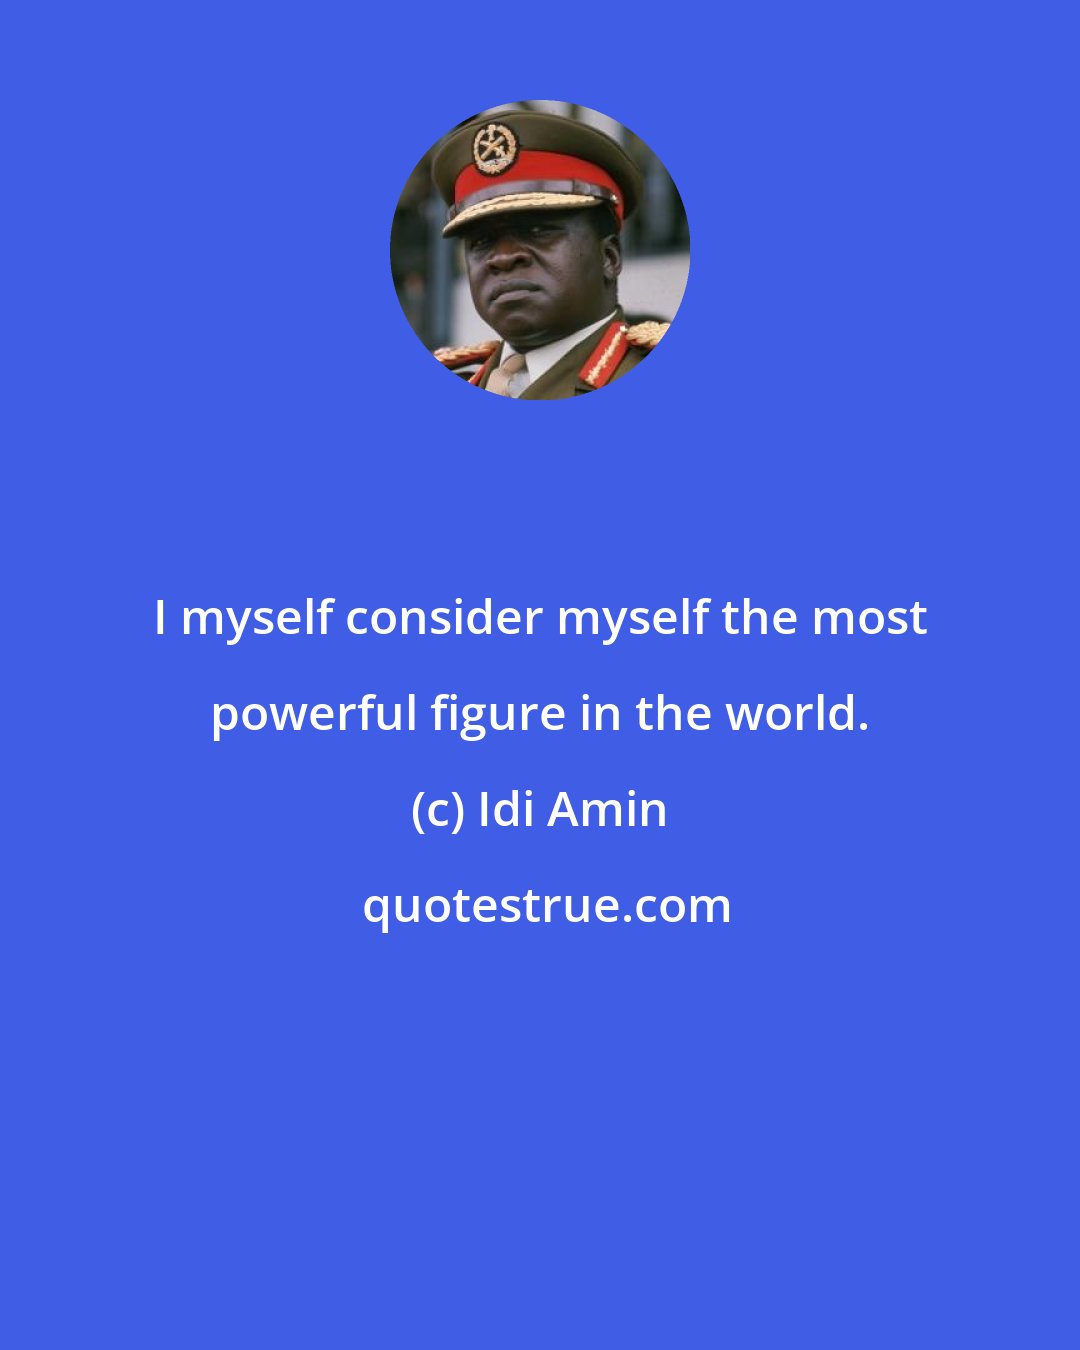 Idi Amin: I myself consider myself the most powerful figure in the world.